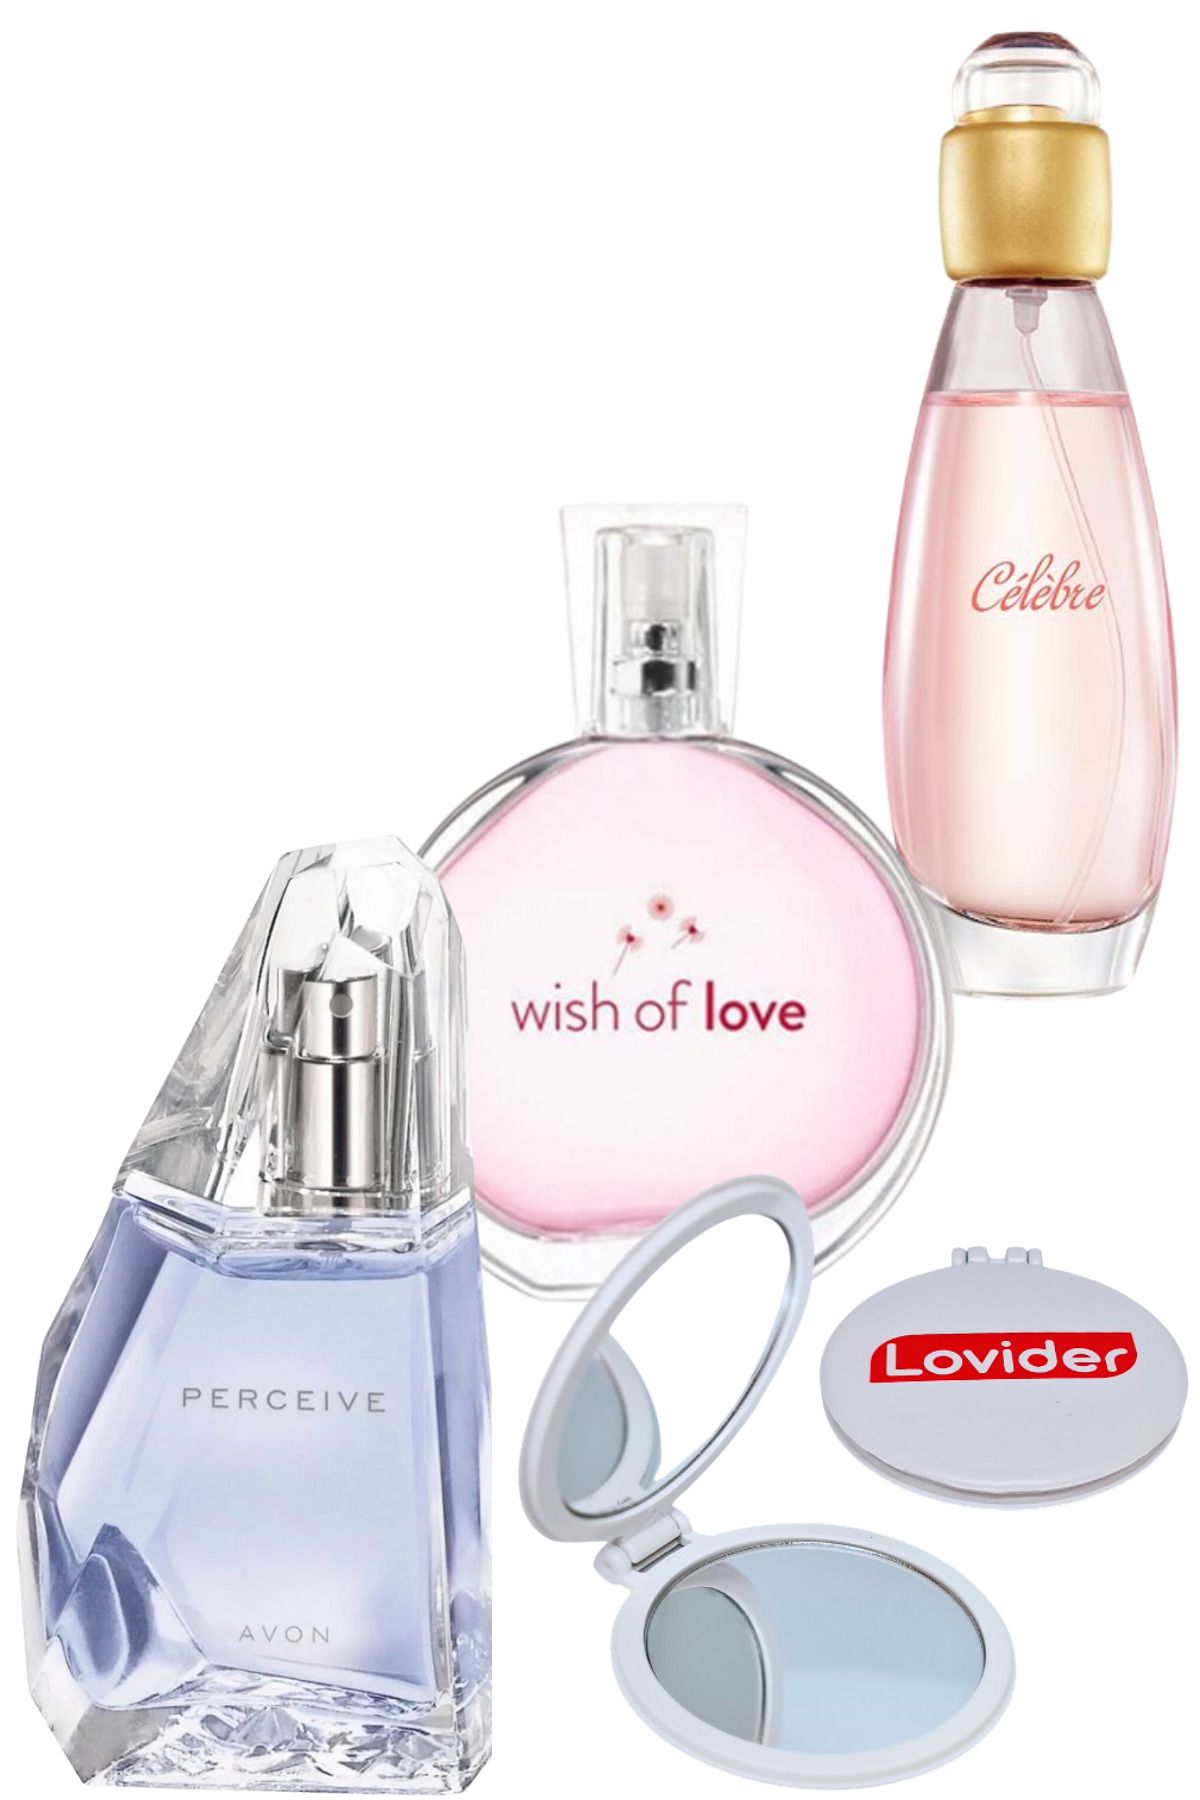 Avon Perceive Kadın Parfüm + Wish Of Love Kadın Parfüm + Celebre Kadın Parfüm + Lovider Cep Ayna